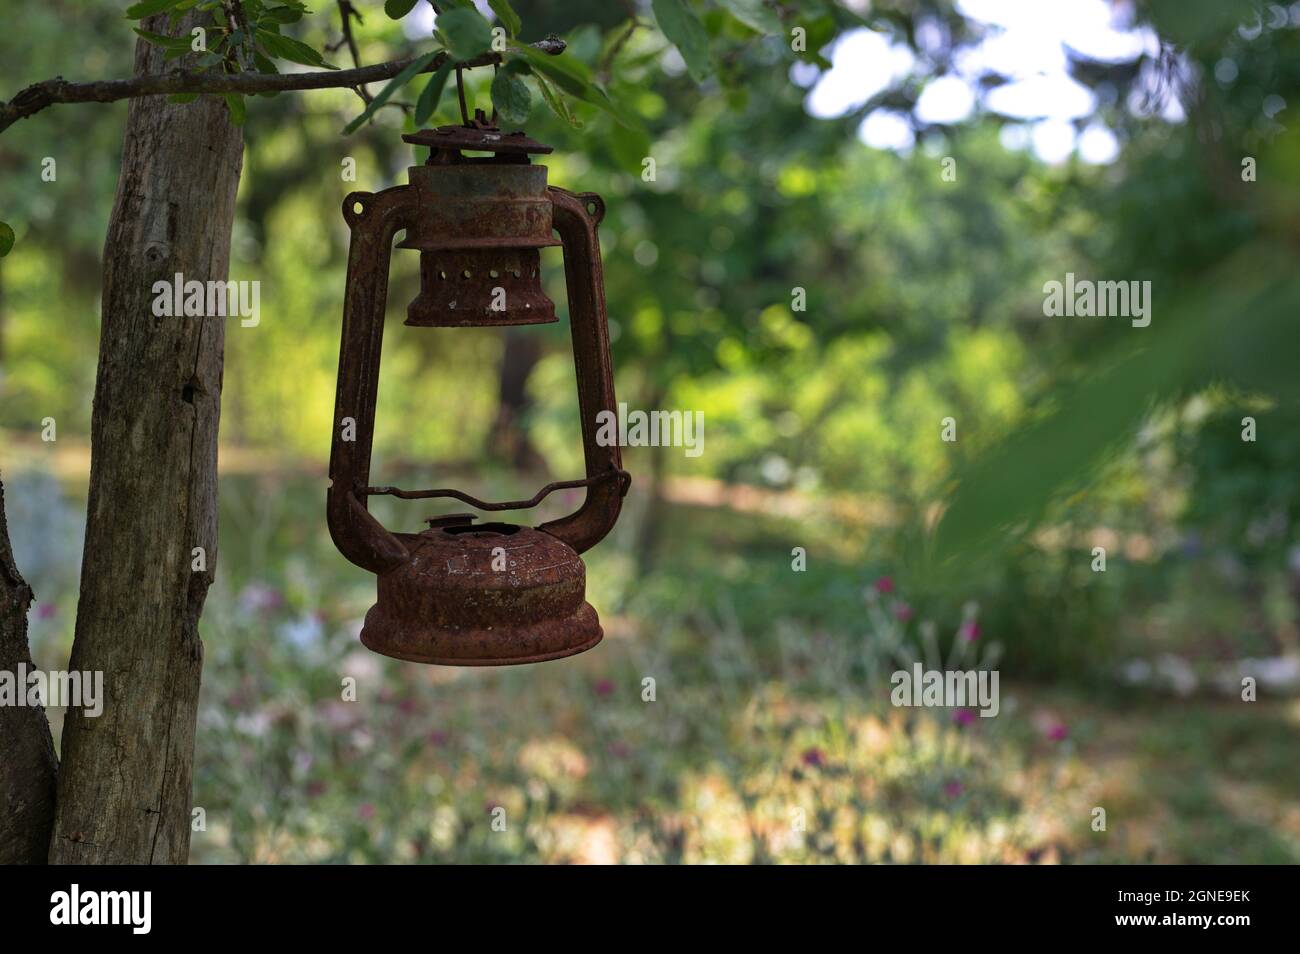 Old rusty kerosene lamp hanging from the tree Stock Photo